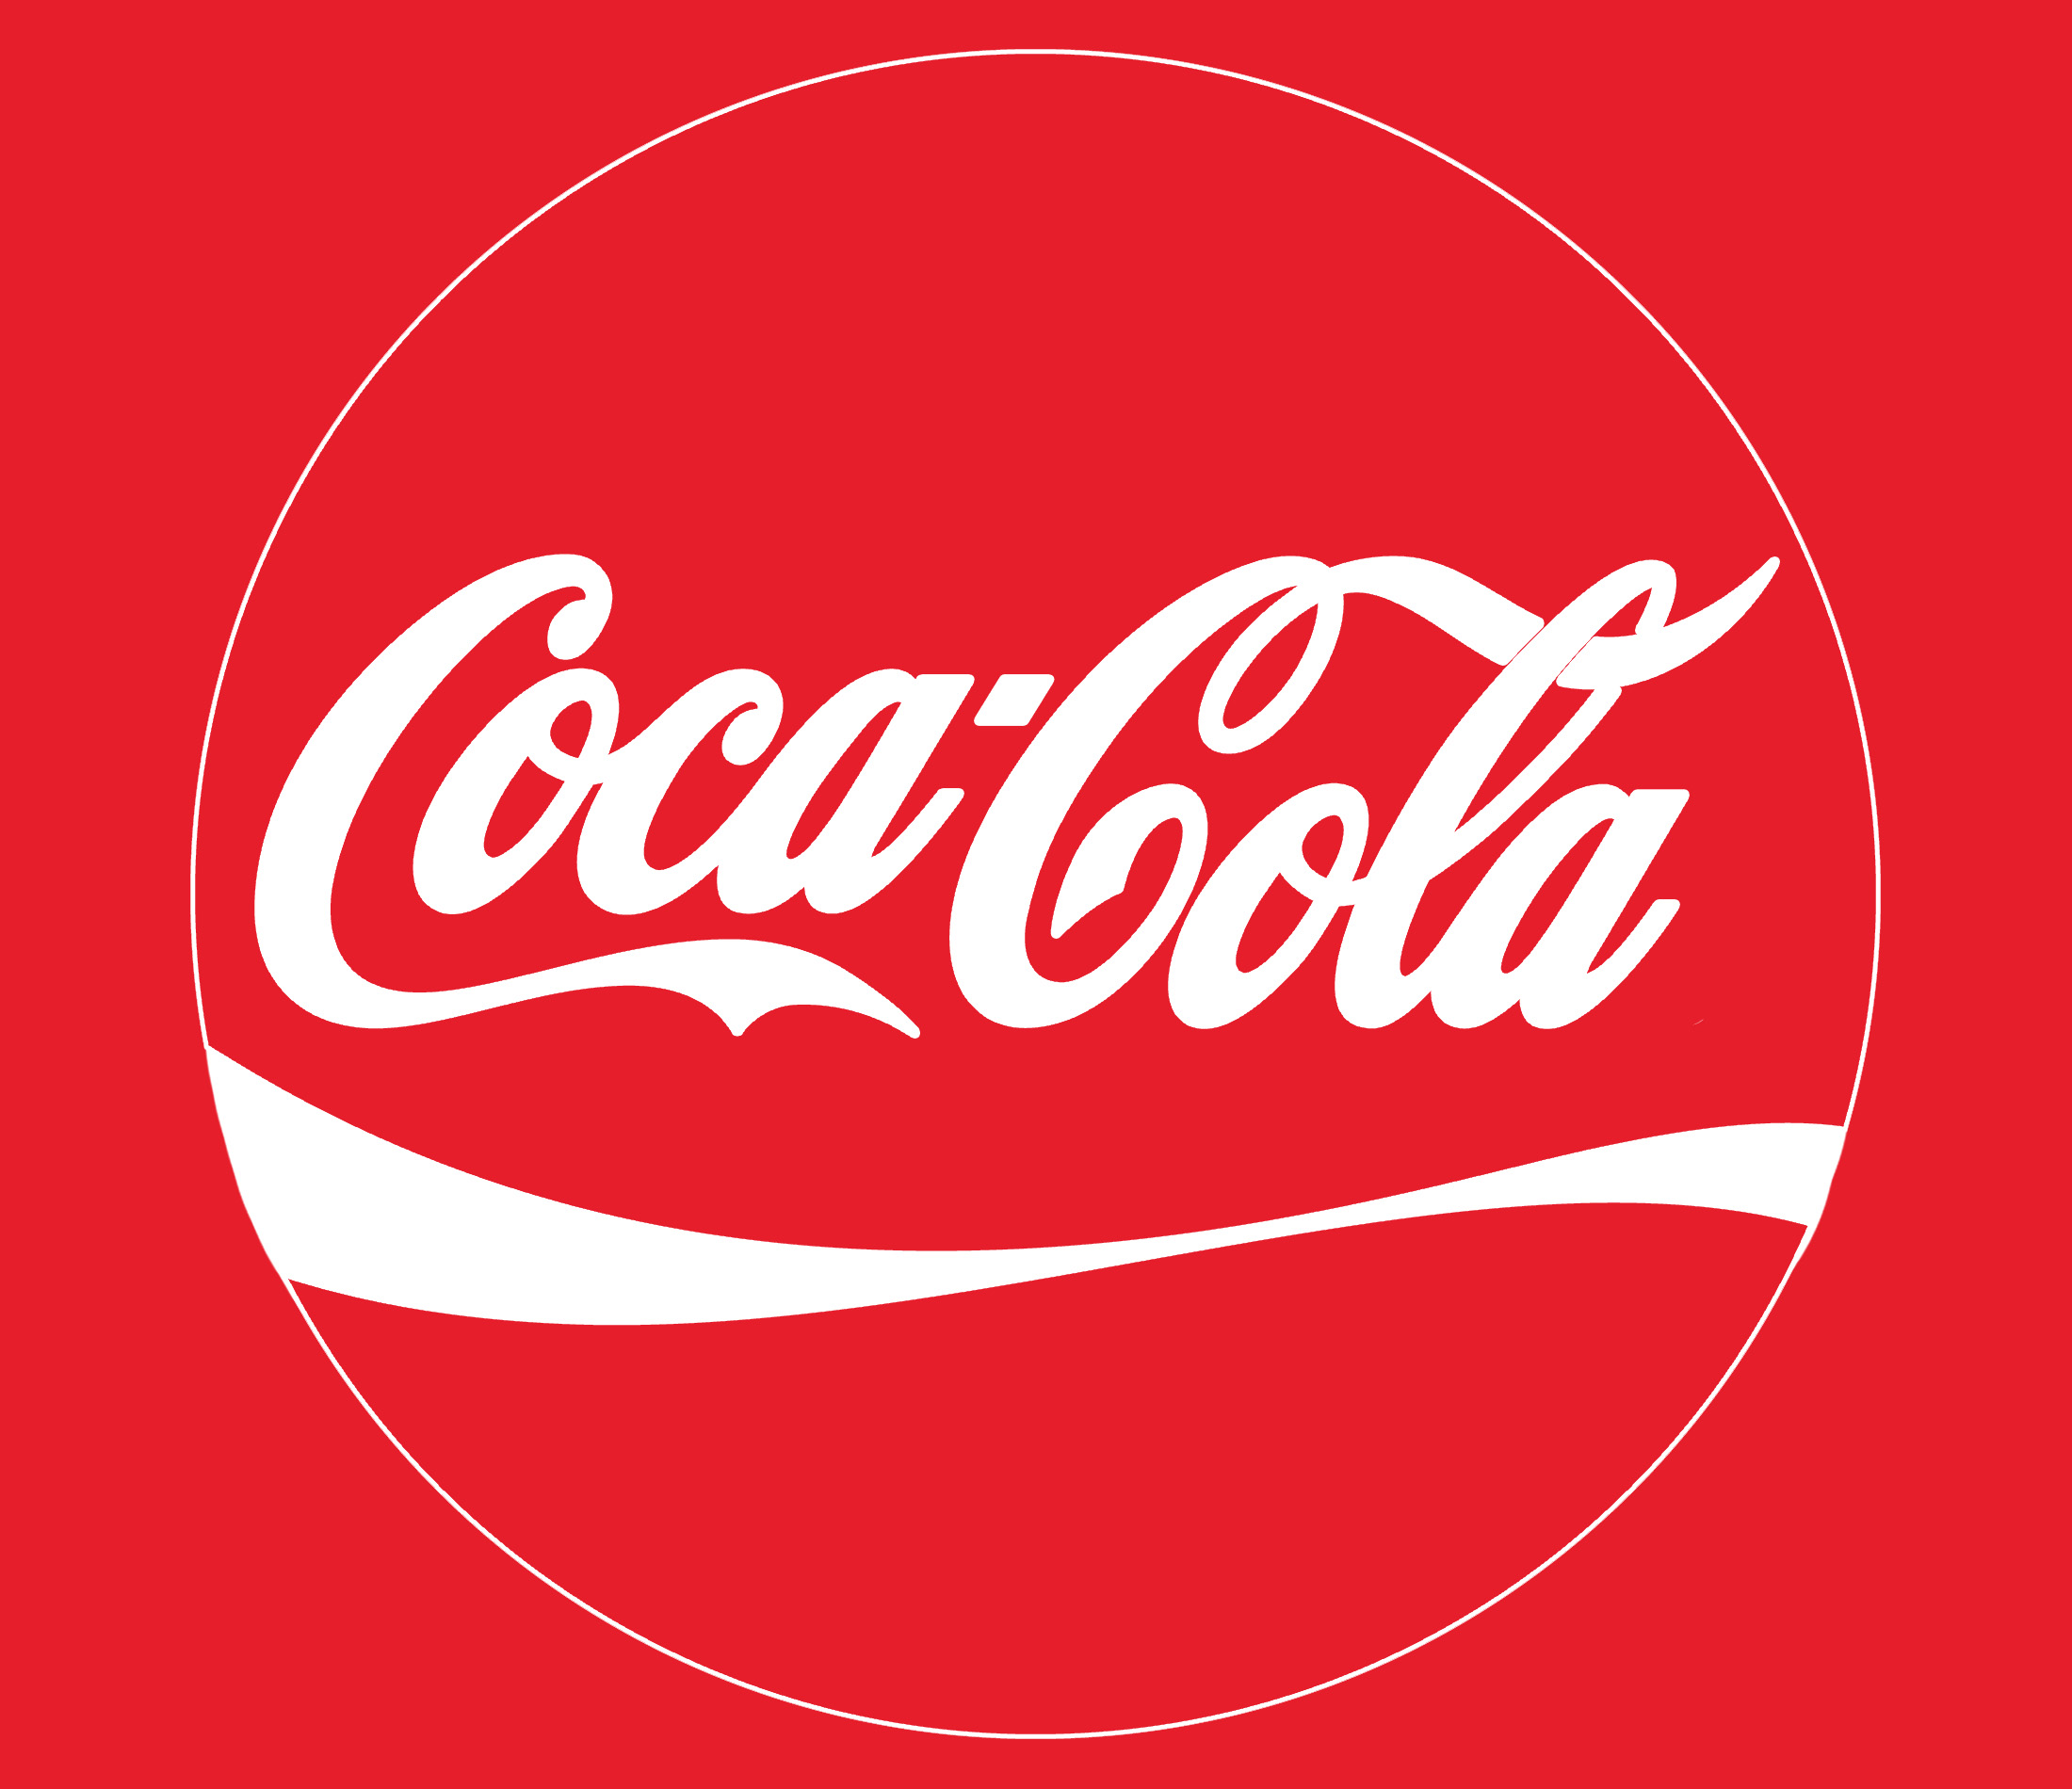 Coca-Cola Logo, Coca-Cola Symbol Meaning, History and Evolution